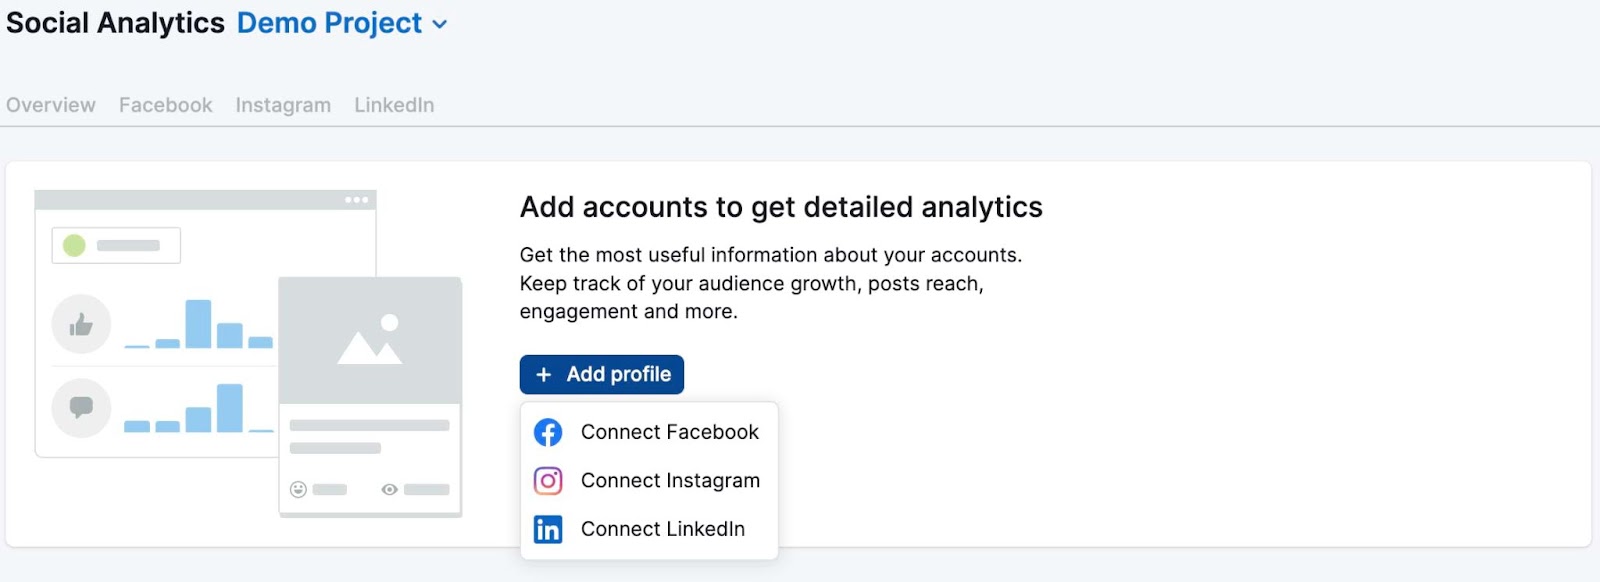 Connecting social media profiles to Social Analytics